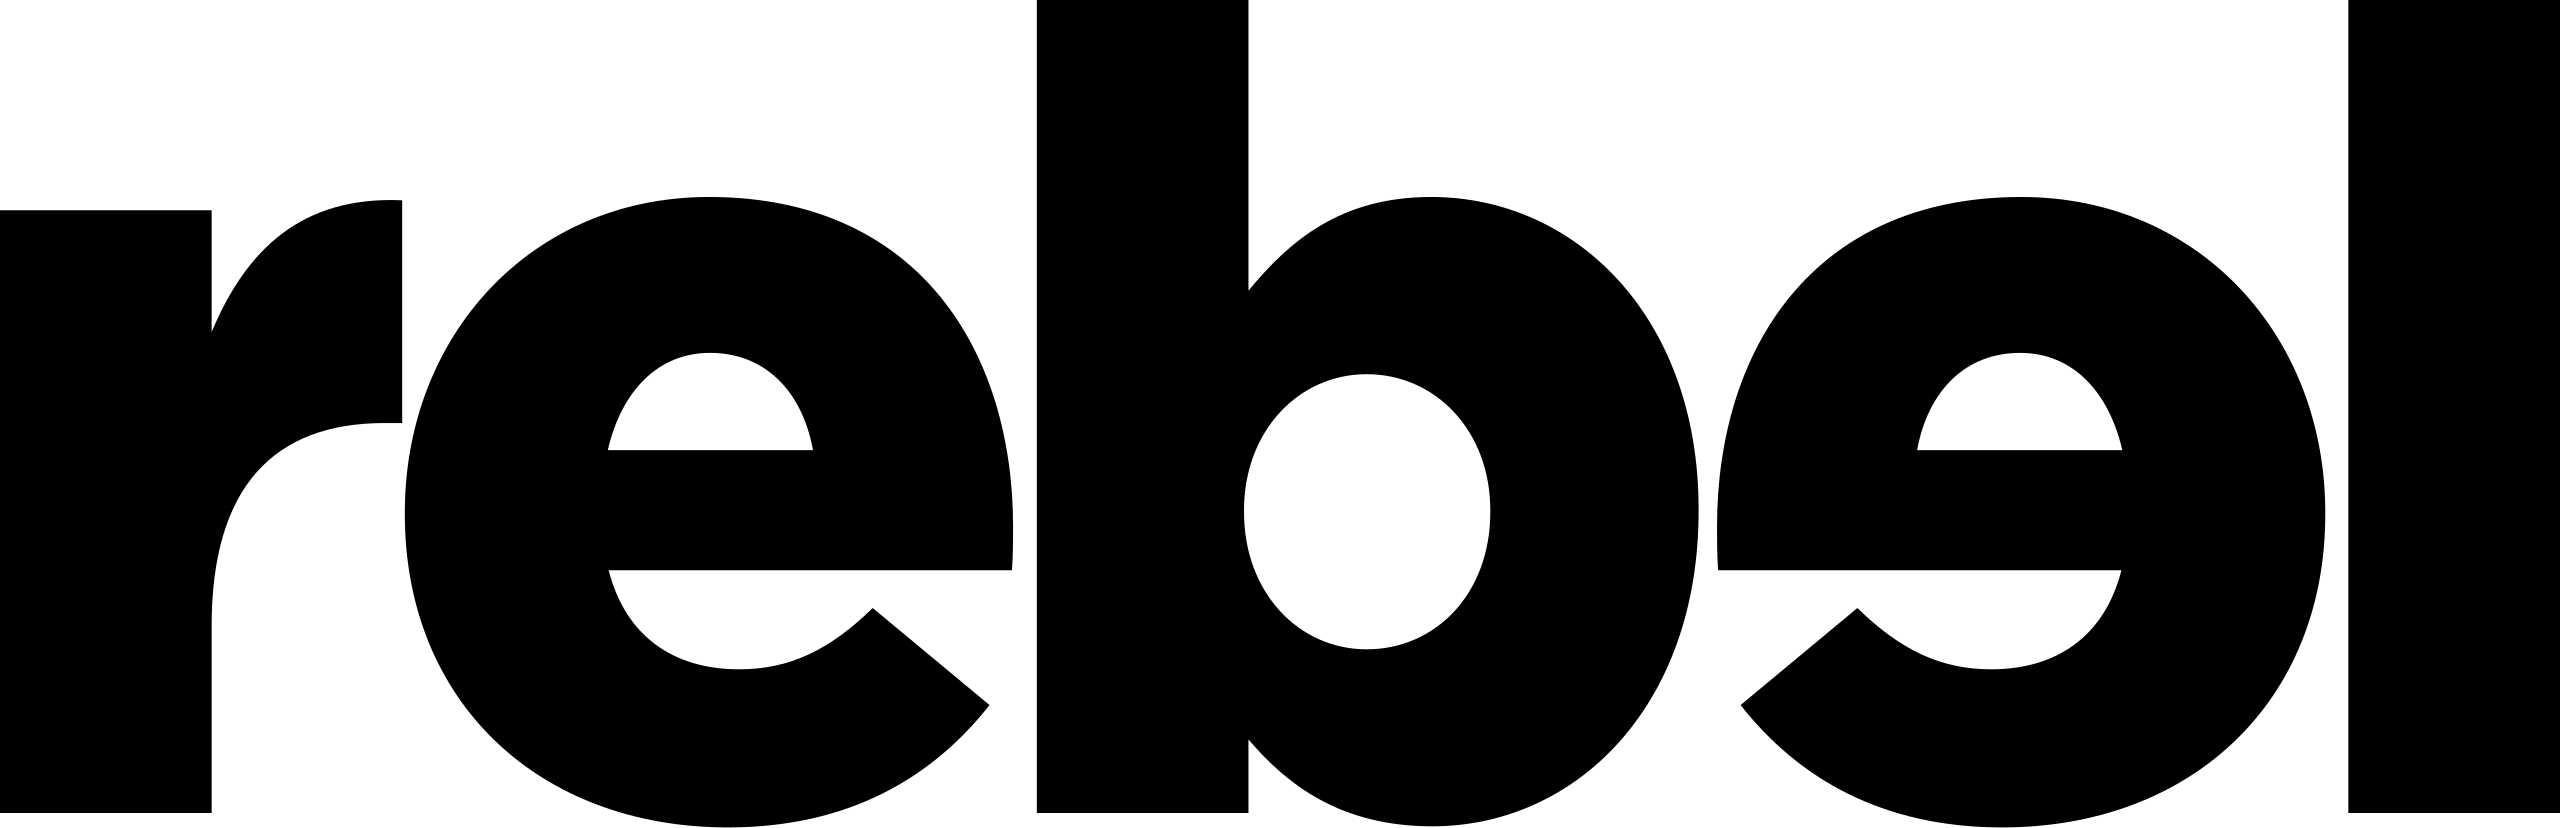 https://upload.wikimedia.org/wikipedia/commons/thumb/d/db/Rebel_Sport_logo.svg/2560px-Rebel_Sport_logo.svg.png